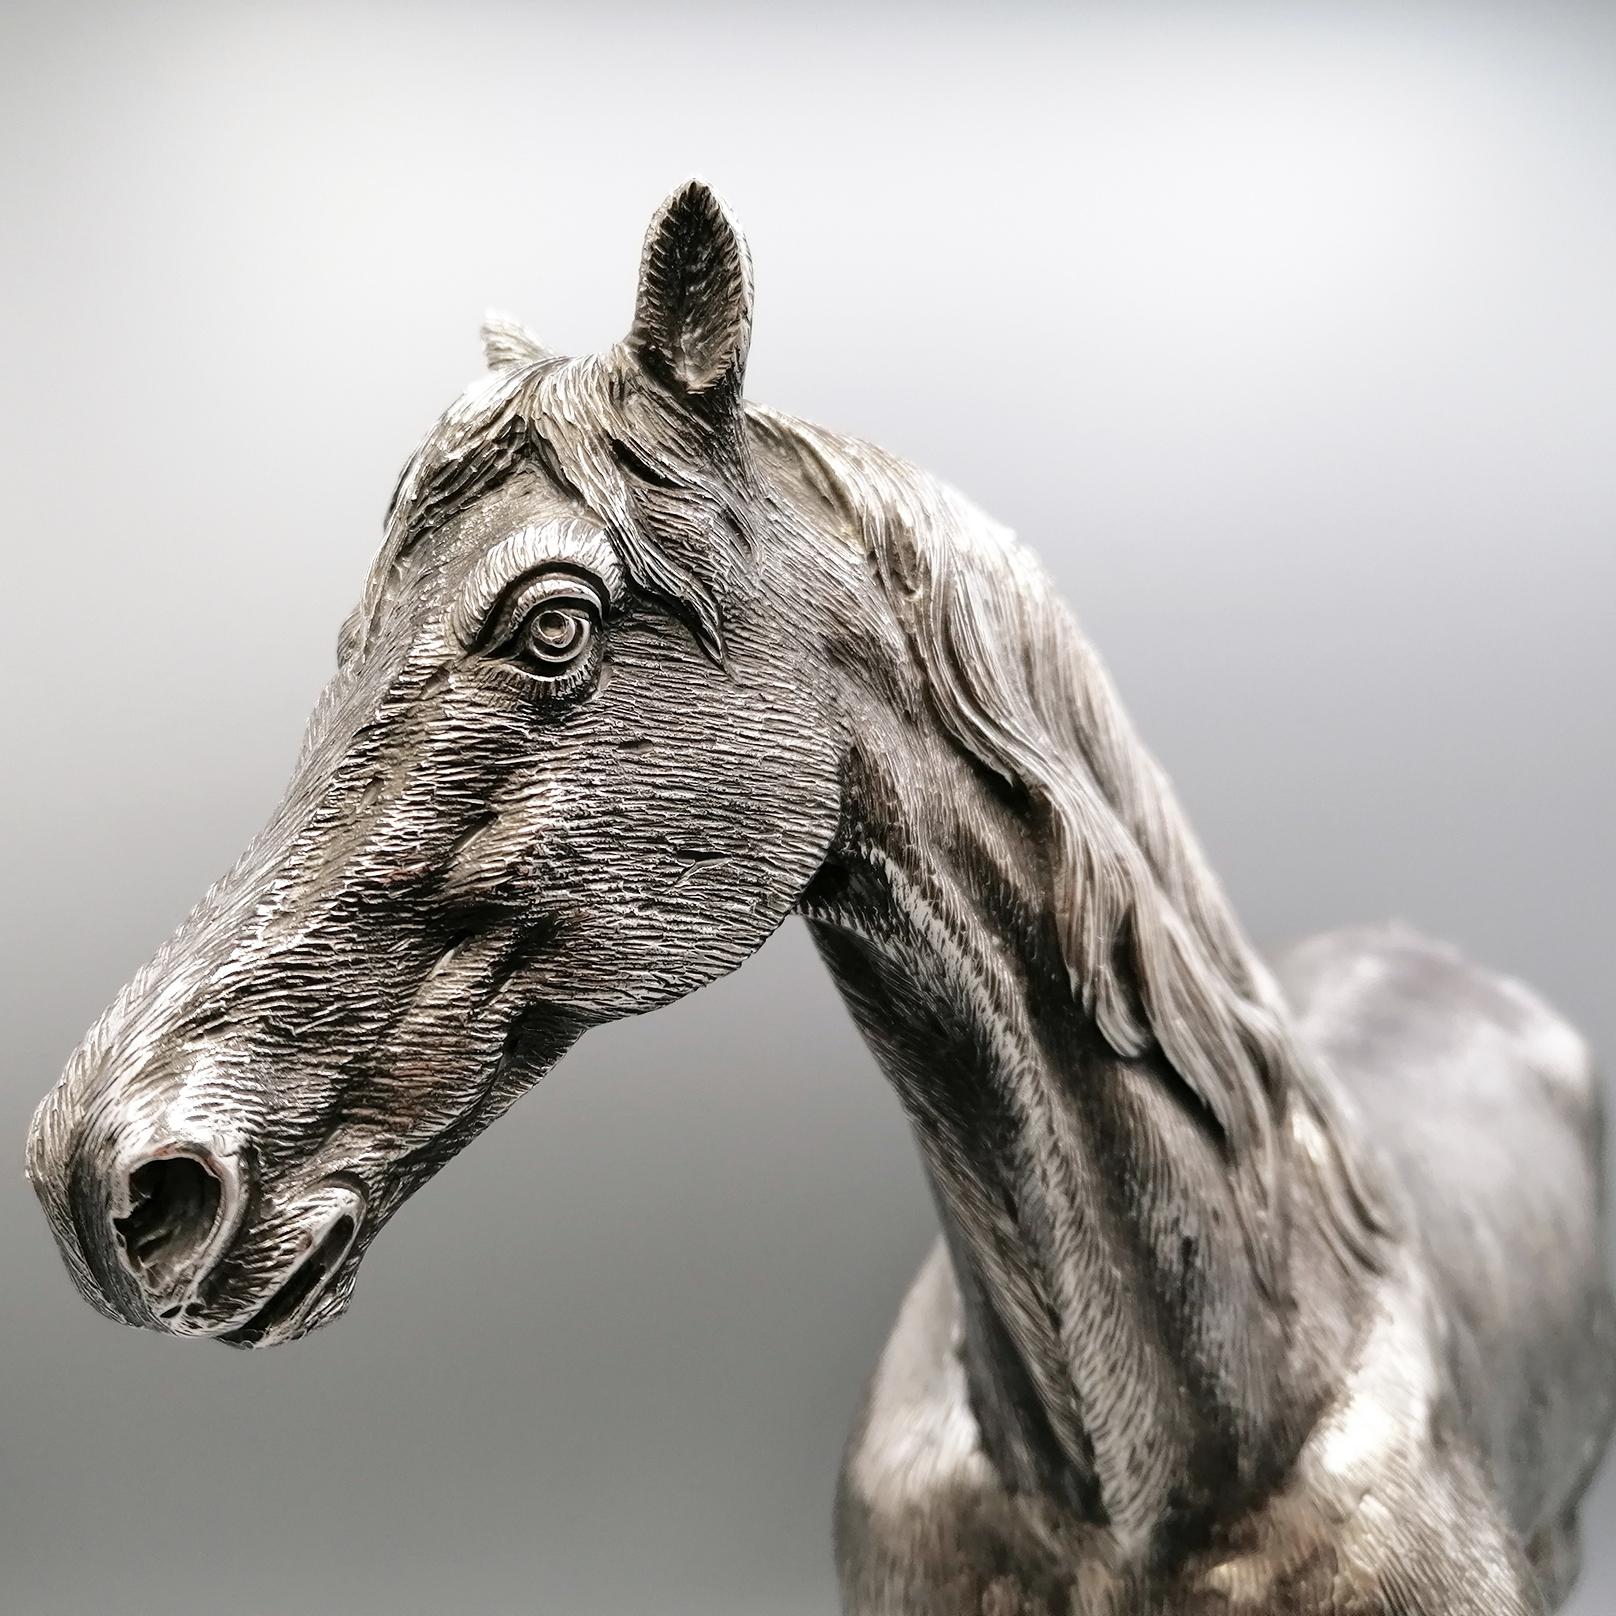 silver horses